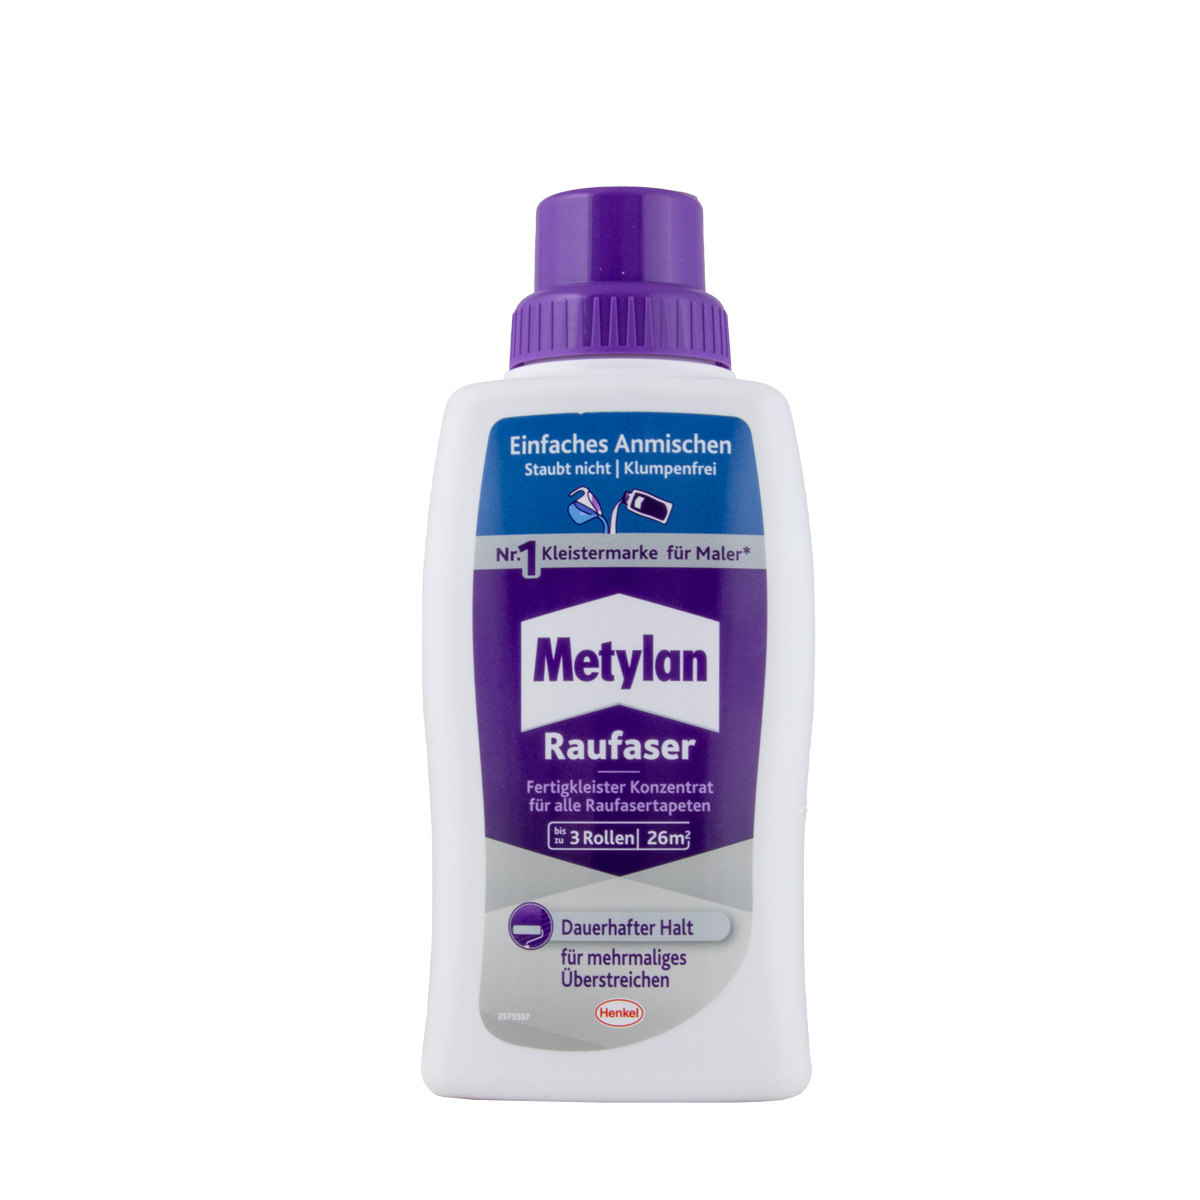 Metylan Produkte | Farbklecks24 online bestellen